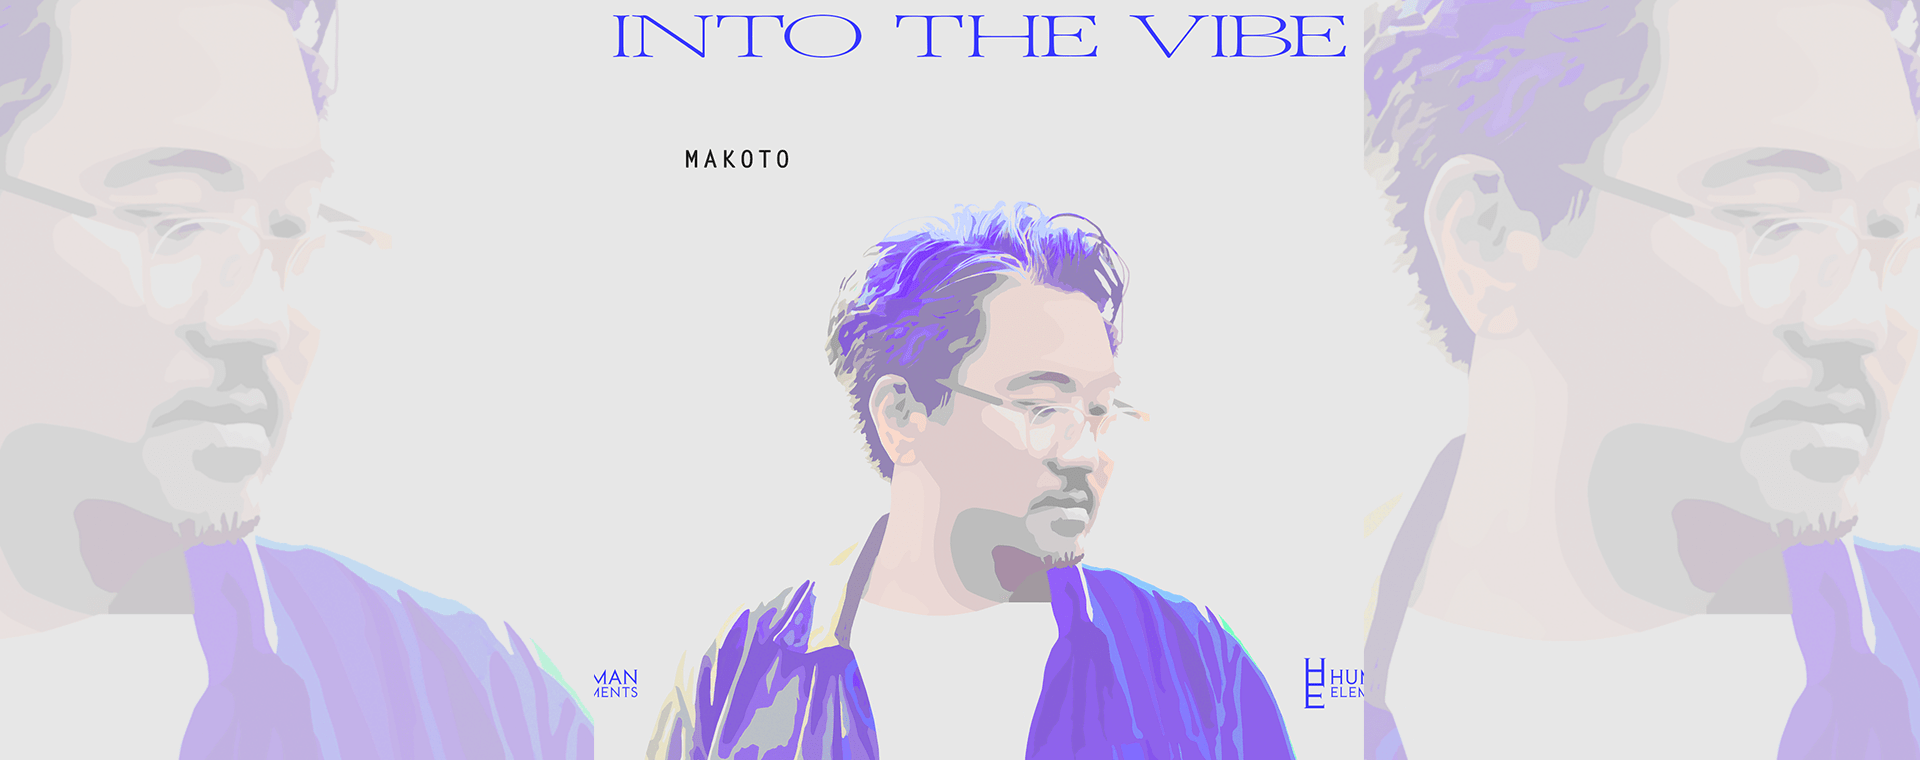 MAKOTO - Into The Vive